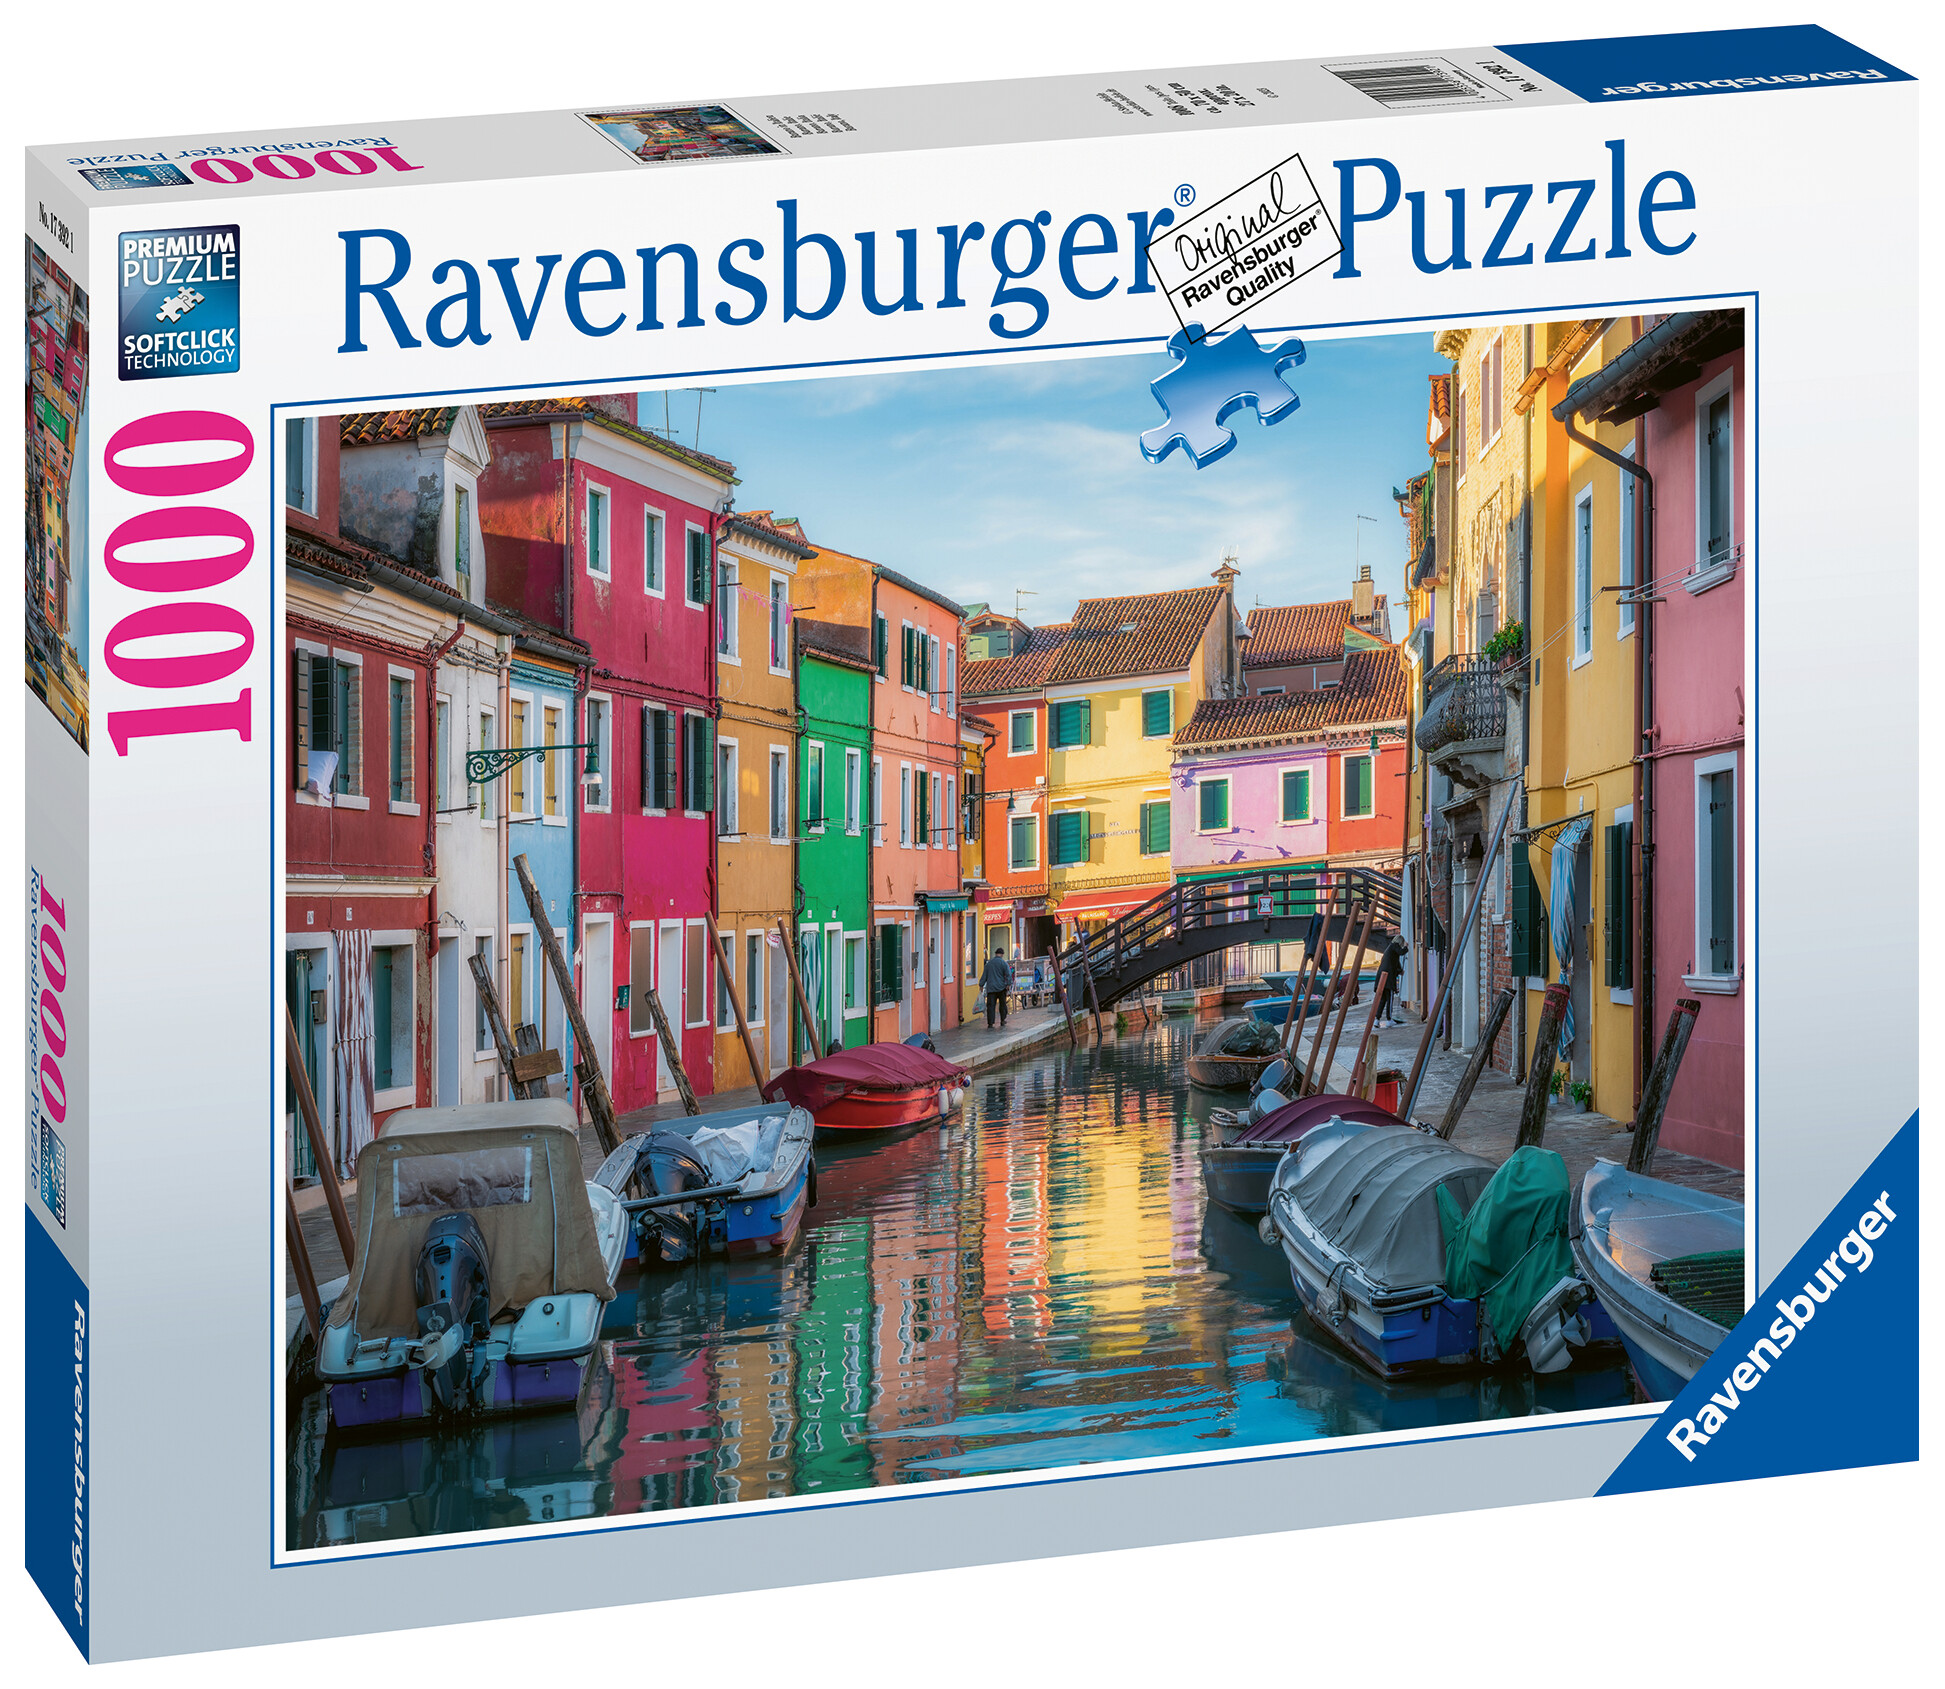 Ravensburger - puzzle burano, italia, 1000 pezzi, puzzle adulti - RAVENSBURGER